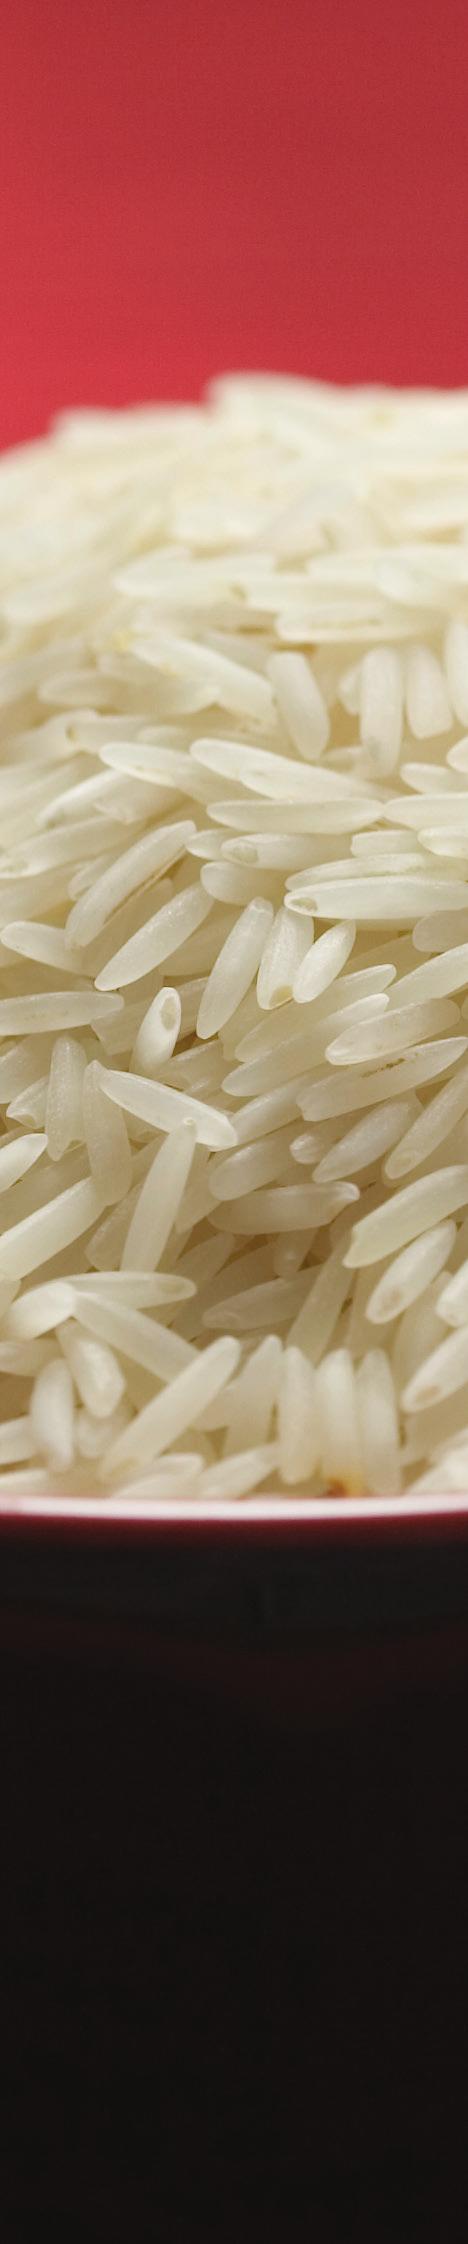 Rice Boiled Rice (V) 1.85 Pilau Rice (V) 1.95 Fried Rice (V) 1.95 Egg Fried Rice 2.50 Vegetable Fried Rice (V) 2.50 Mushroom Pilau Rice (V) 2.50 Garlic Fried Rice (V) 2.